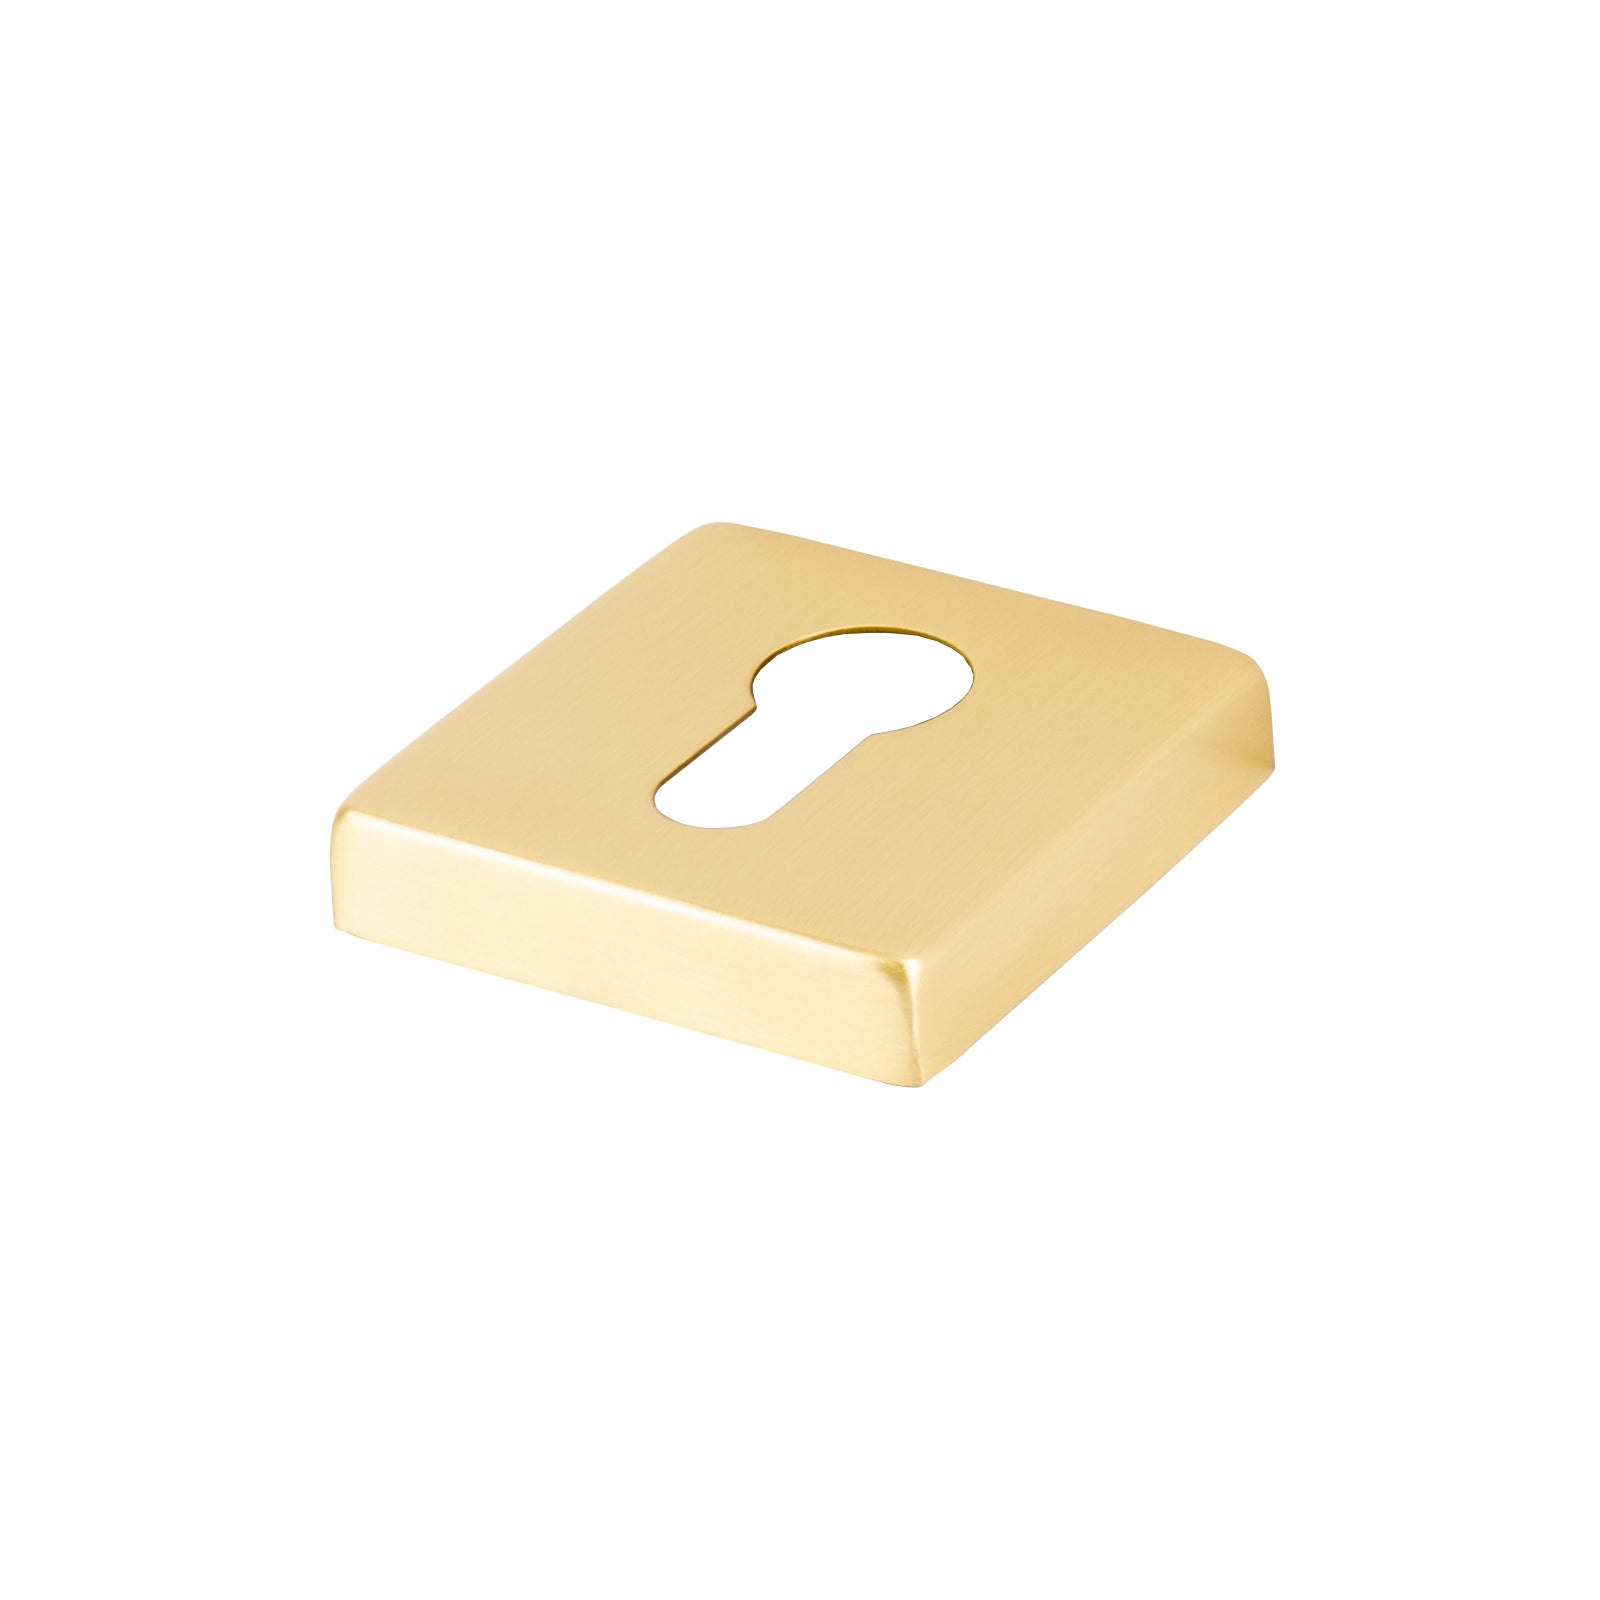 satin brass square escutcheon euro, solid brass keyhole cover SHOW